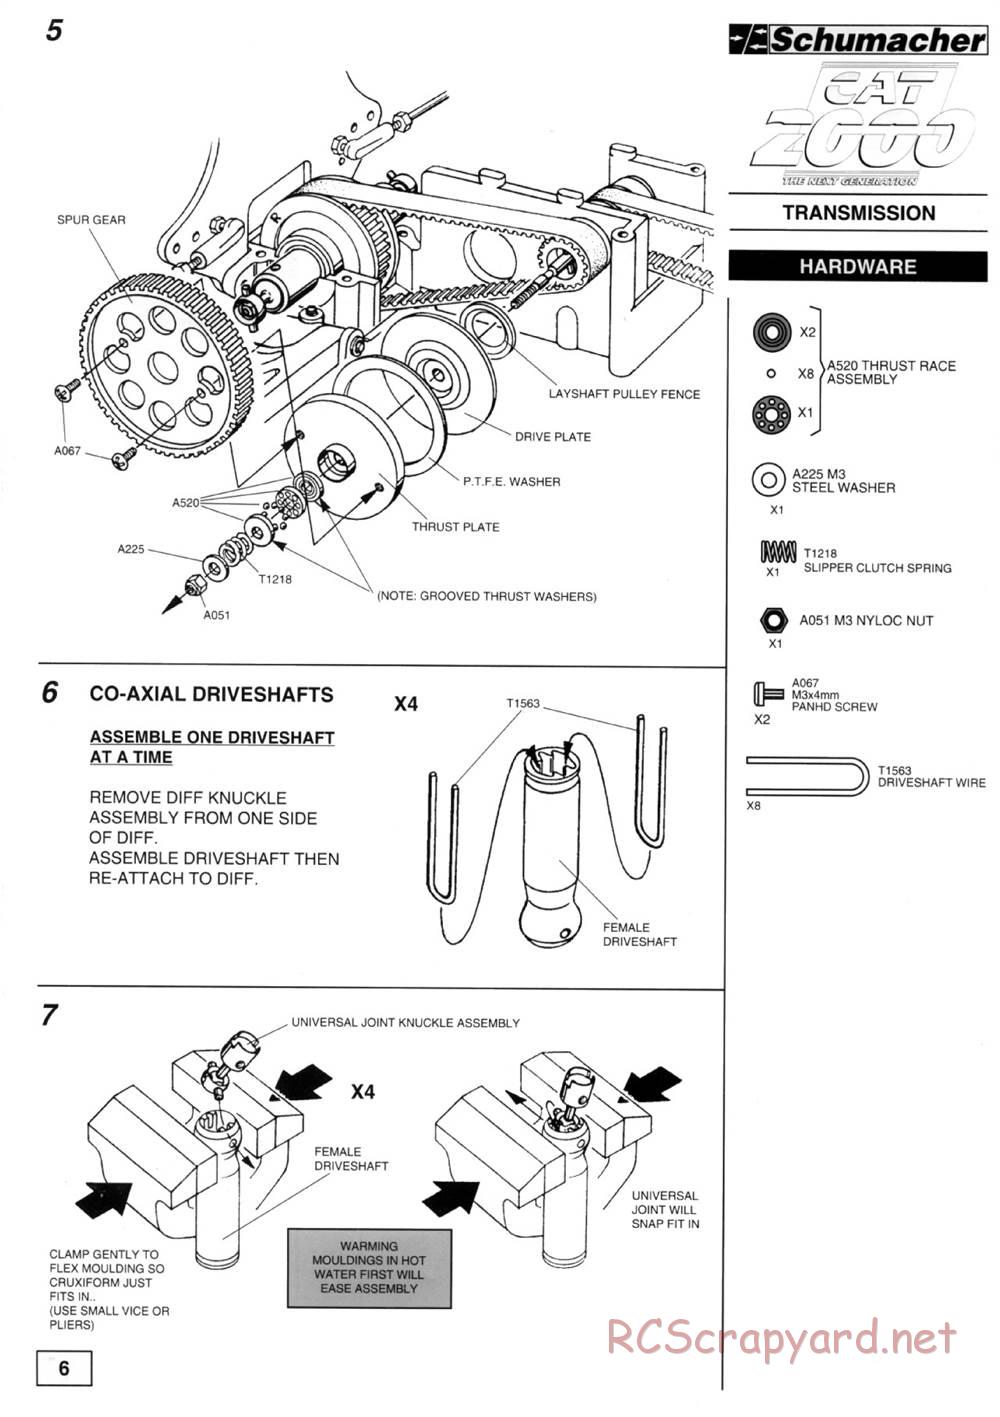 Schumacher - Cat 2000 - Manual - Page 8